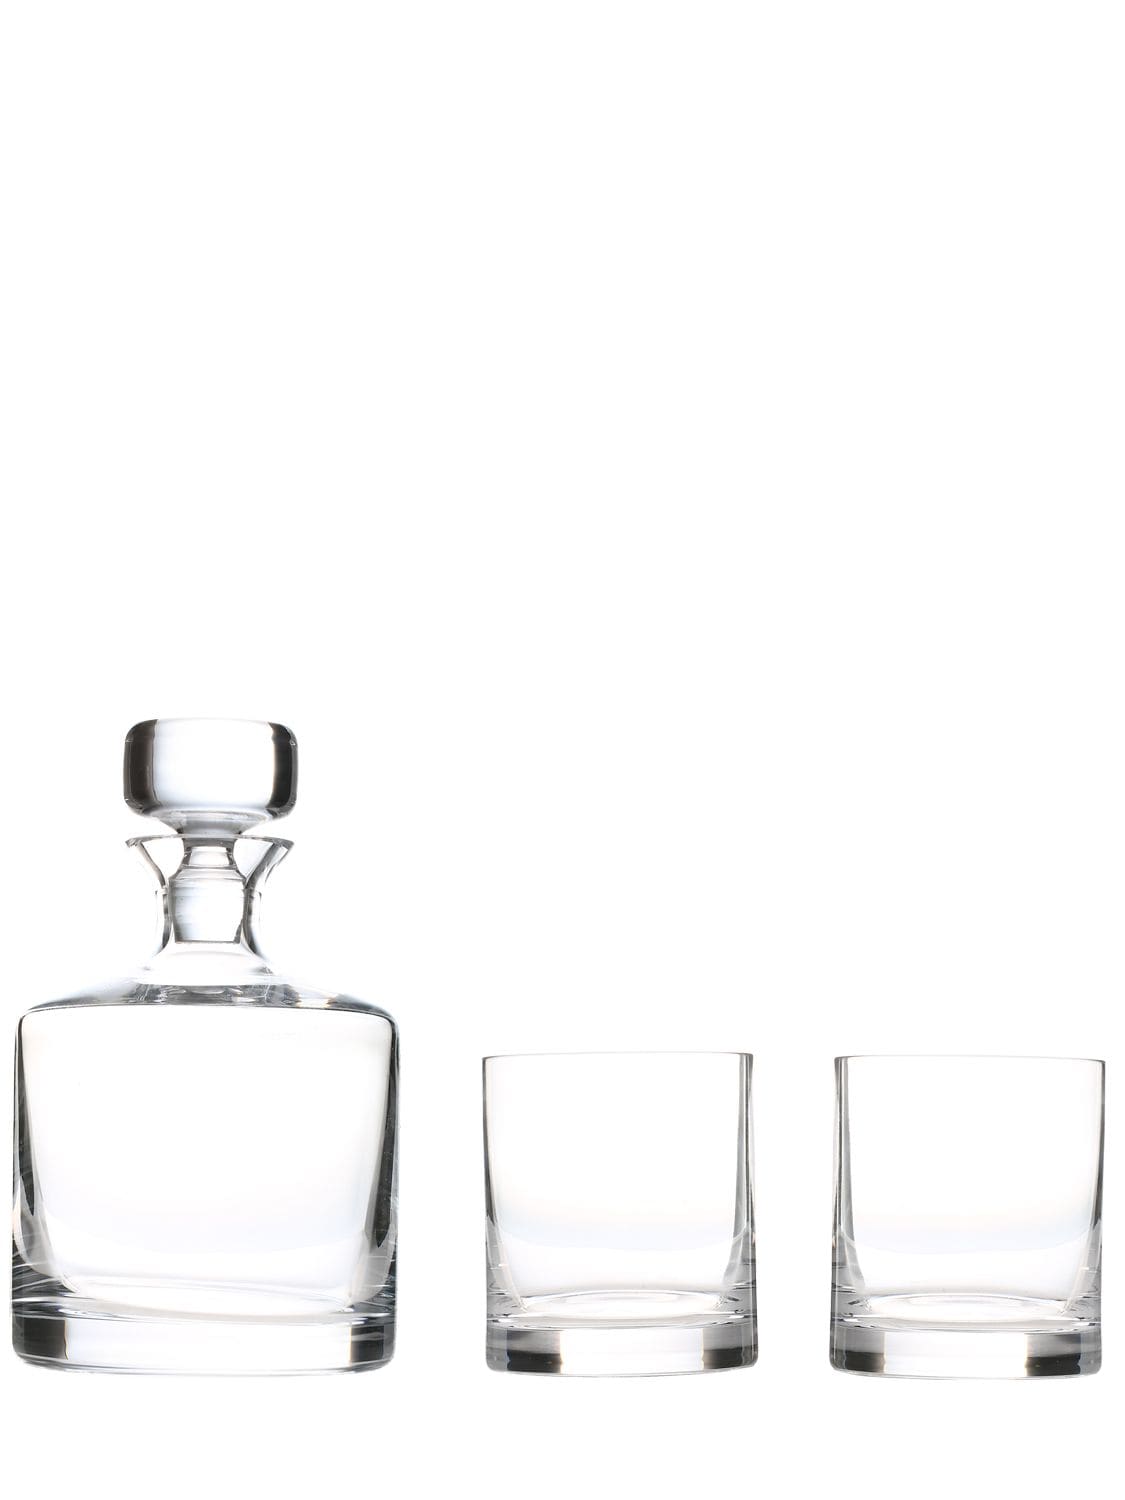 Armani/casa Corelli Crystal Whiskey Set In Transparent